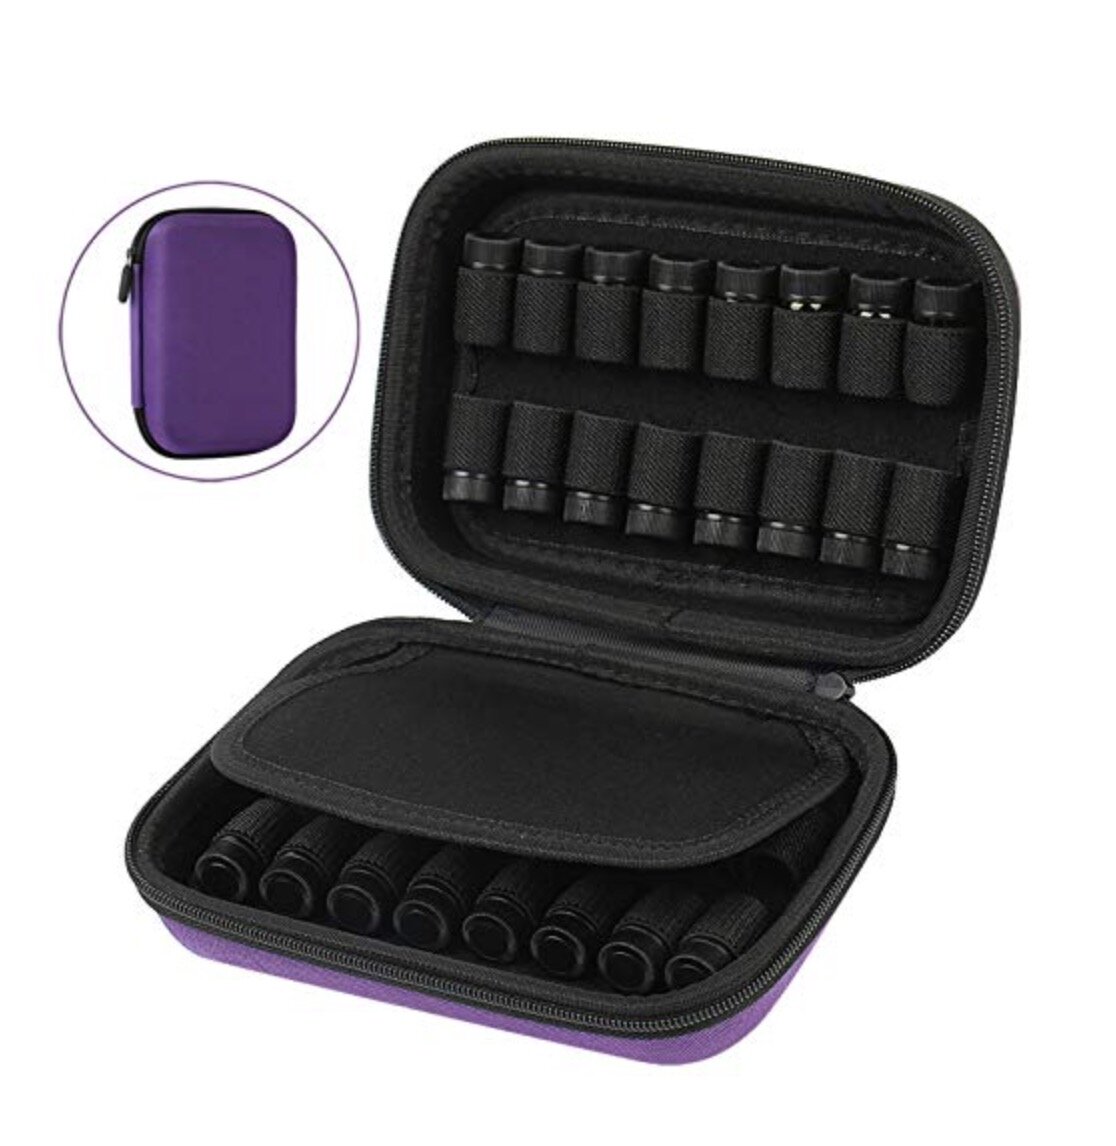 Sampling Case - holds 32 vials (Amazon)